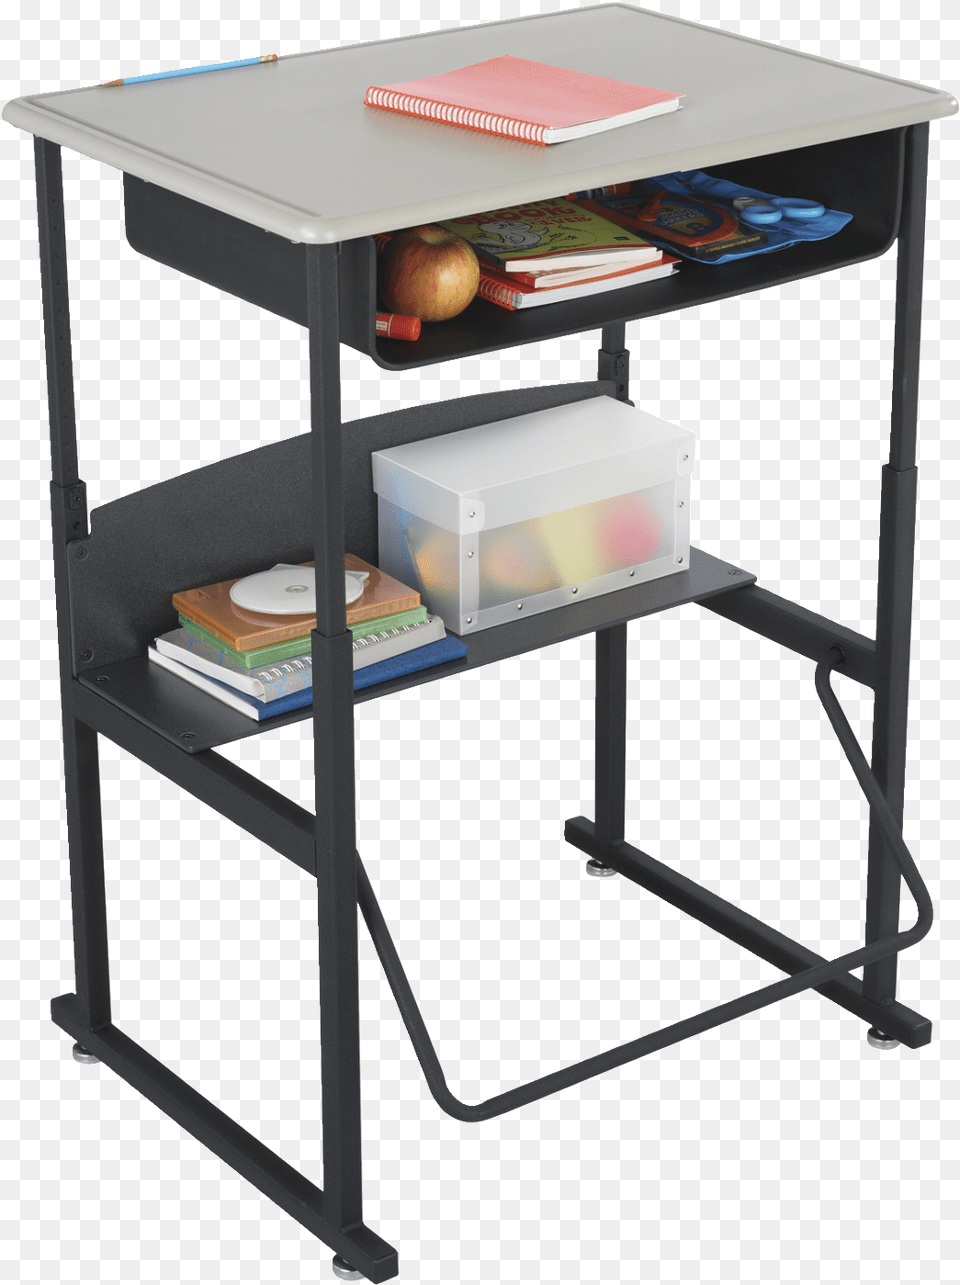 Safco Alphabetter Desk With Bookboxx Student Desks Standing Desk For School, Furniture, Table, Drawer, Computer Free Png Download